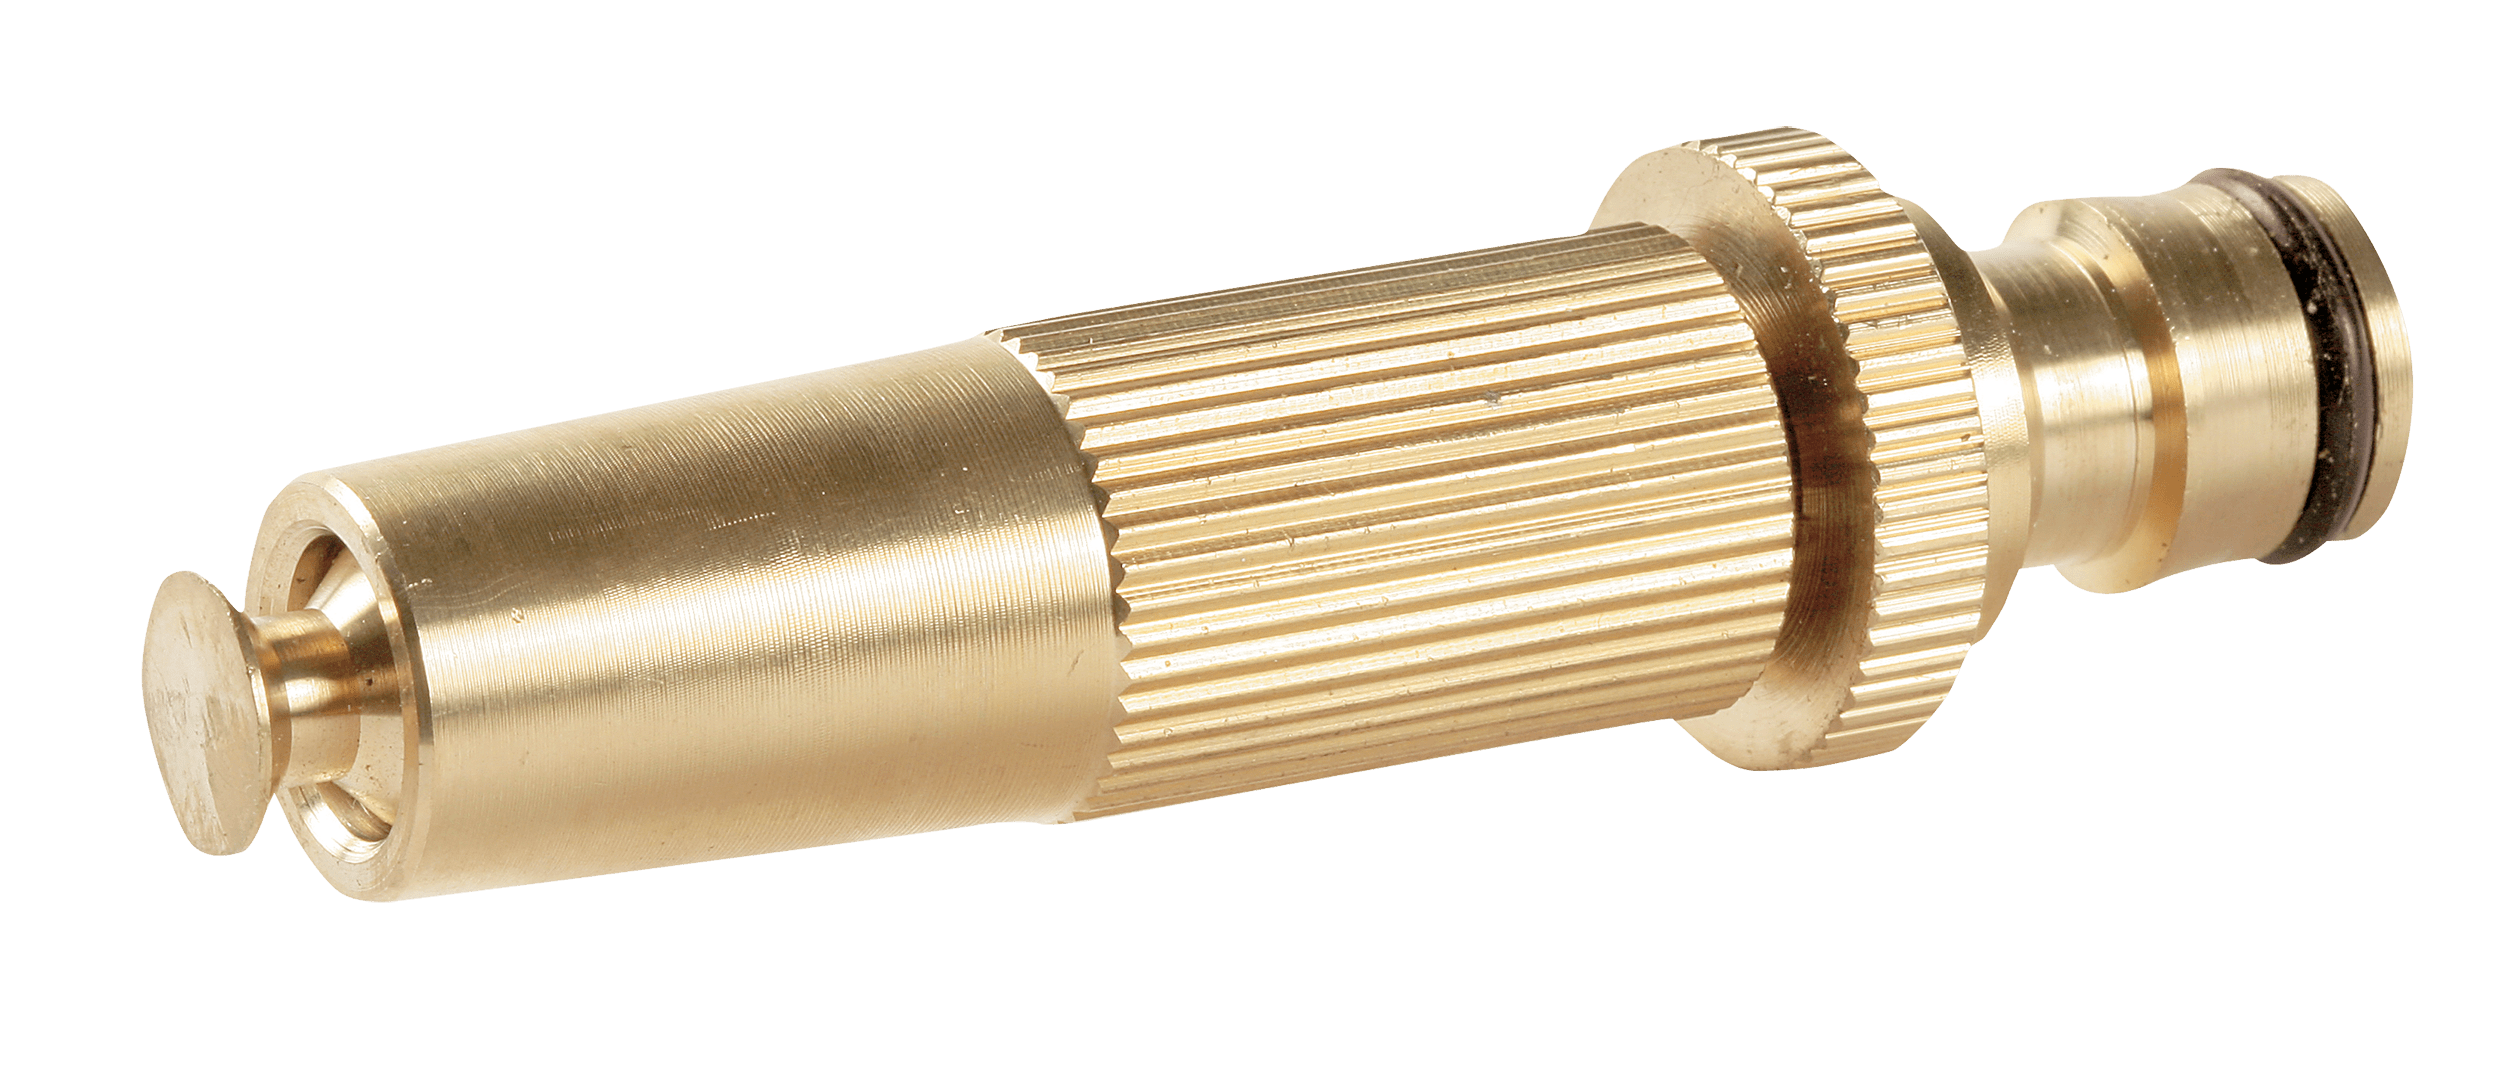 Adjustable brass spray nozzle